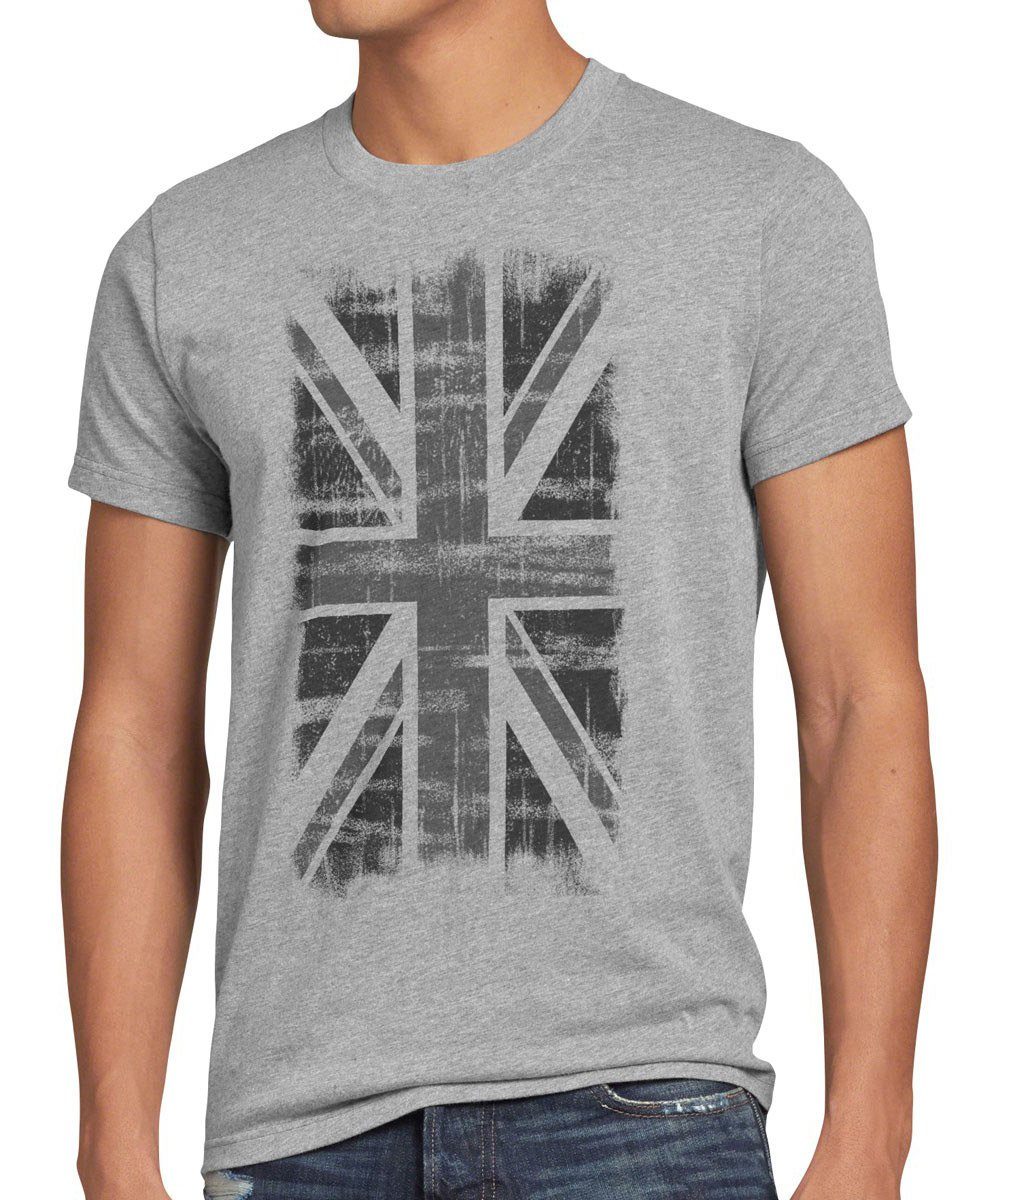 style3 Print-Shirt Herren T-Shirt England Union Jack Britain Flagge United Kingdom UK London flag grau meliert